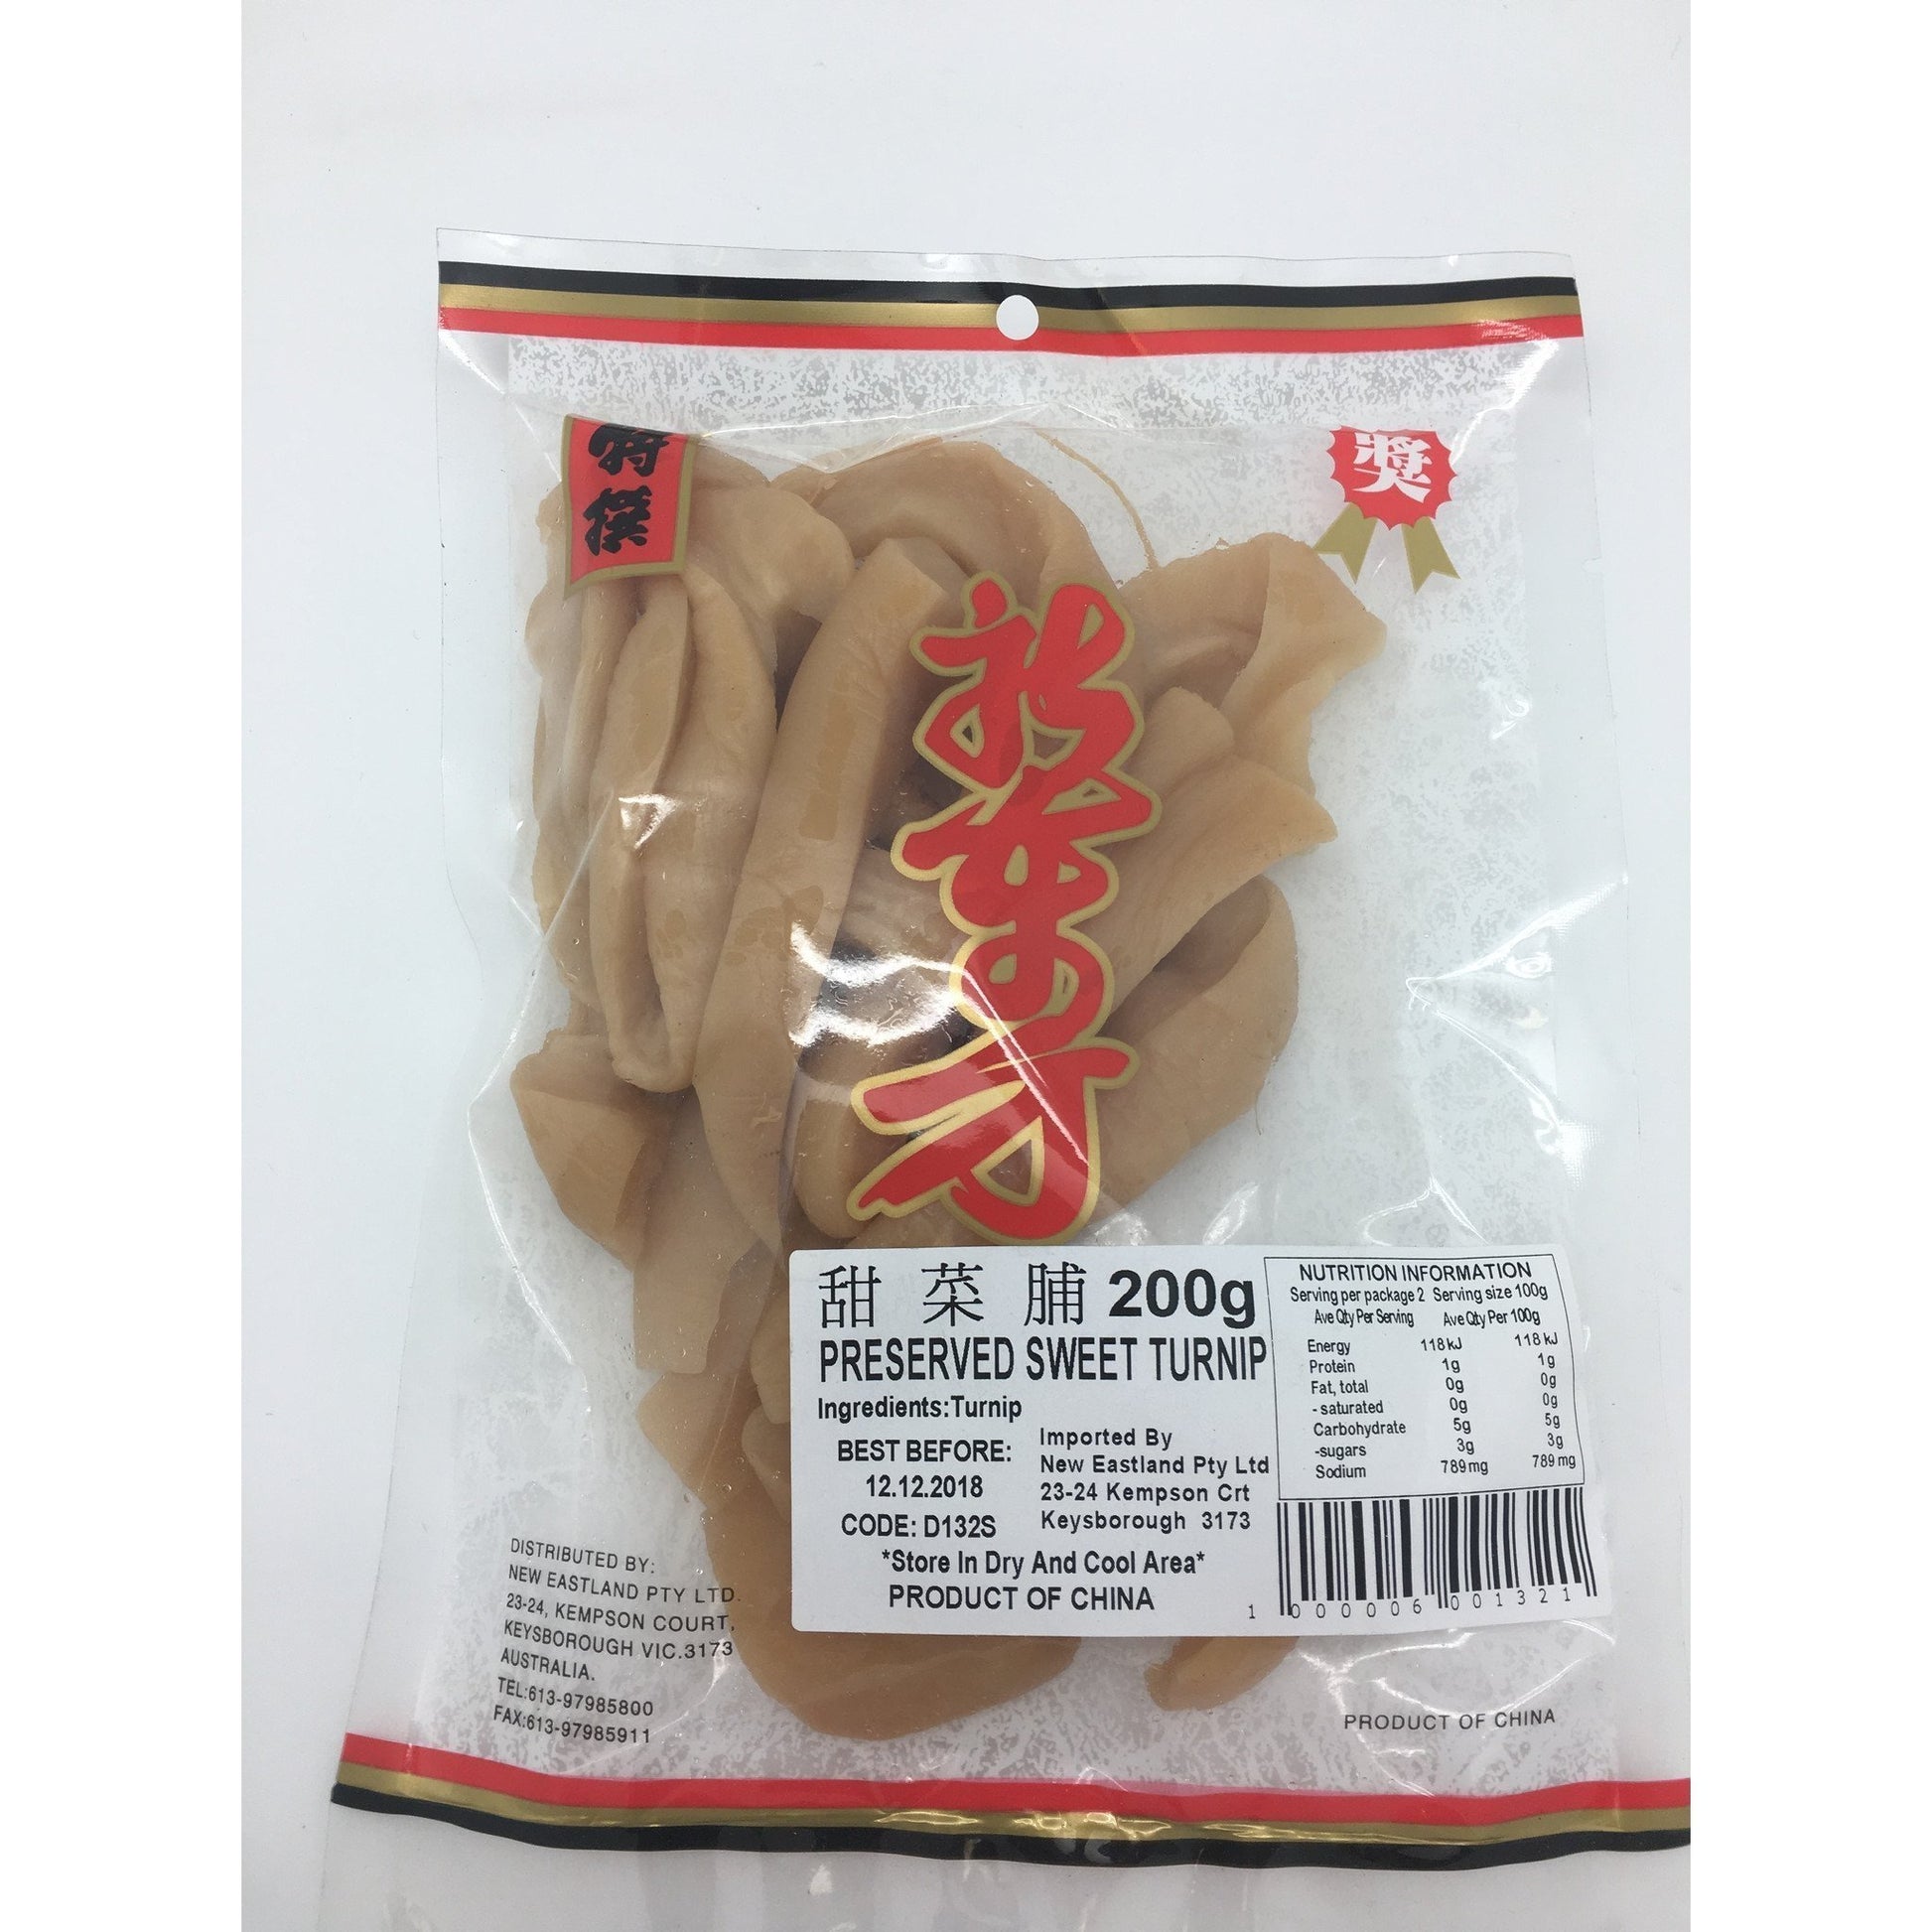 D132 New Eastland Brand - Preserved Sweet Turnip 200g - 50 bags / 1CTN - New Eastland Pty Ltd - Asian food wholesalers